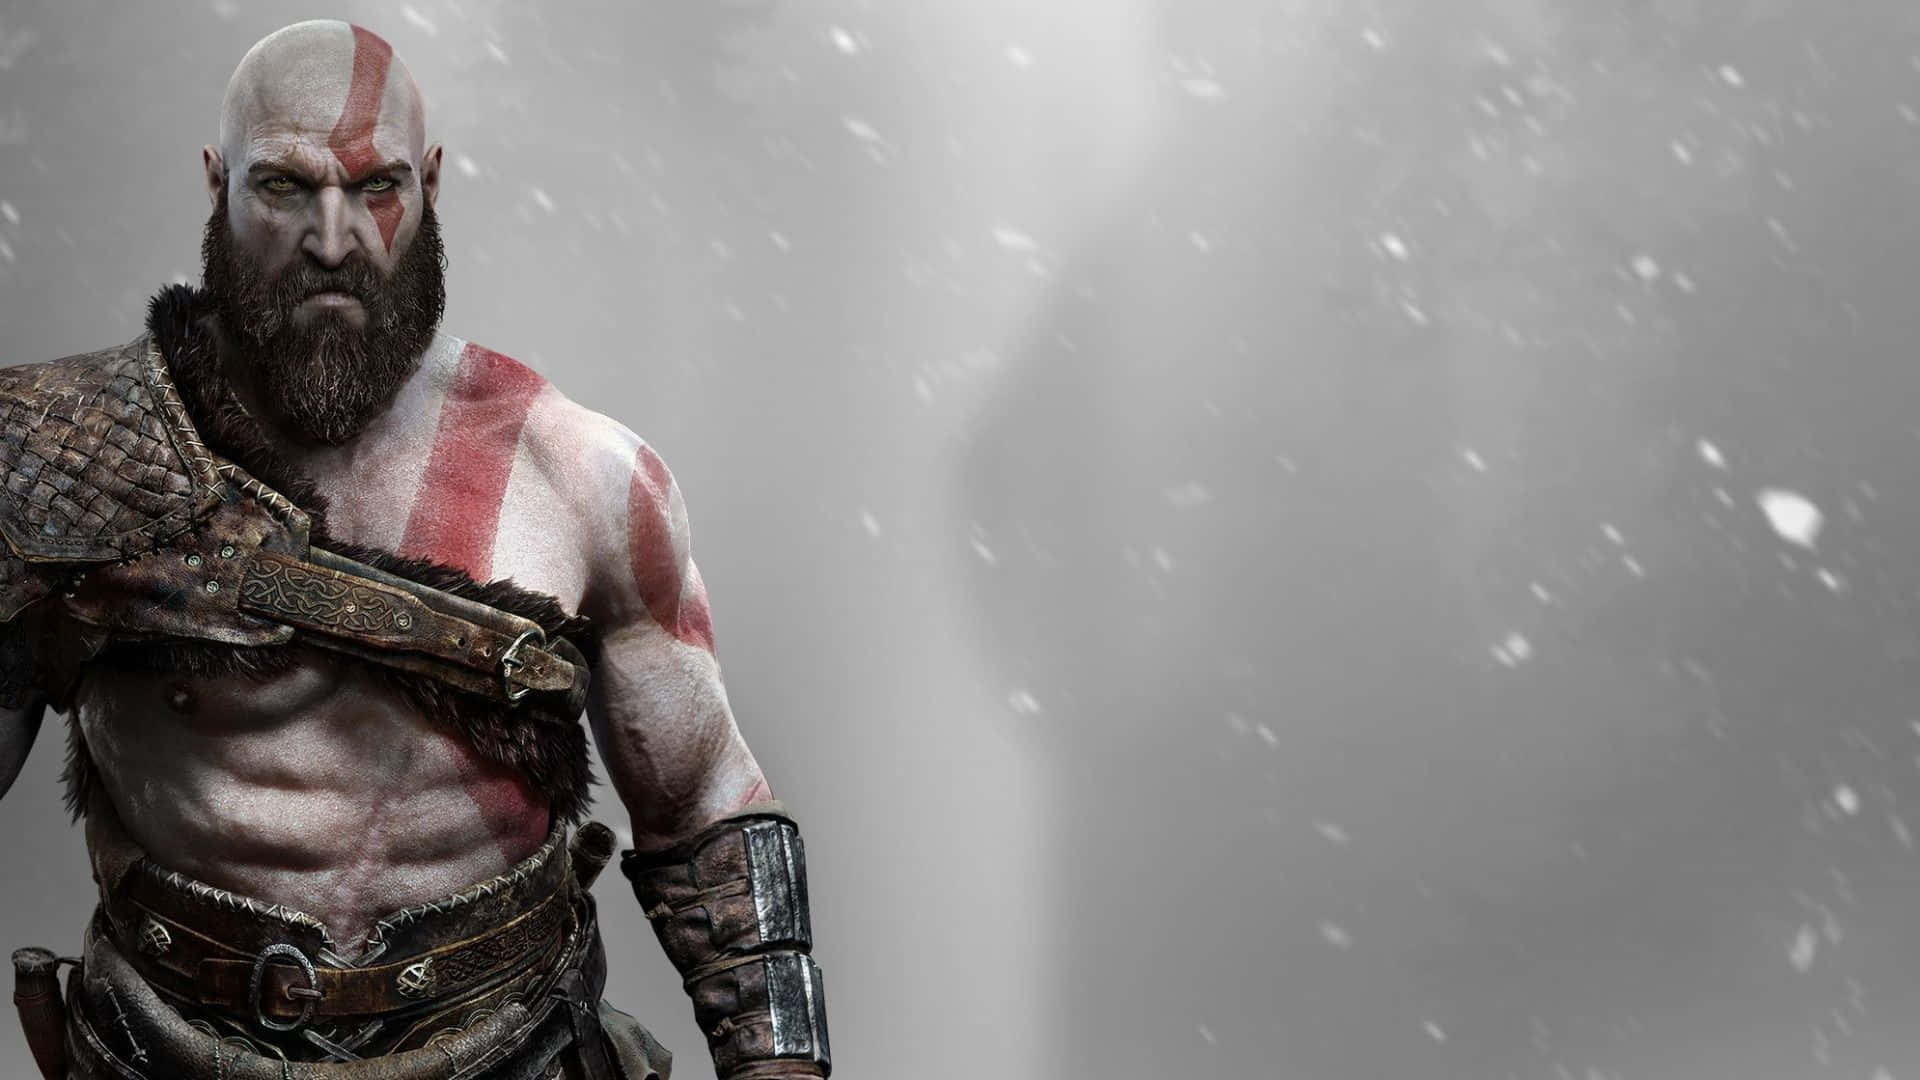 Epic Battle - Kratos vs Baldur in God of War